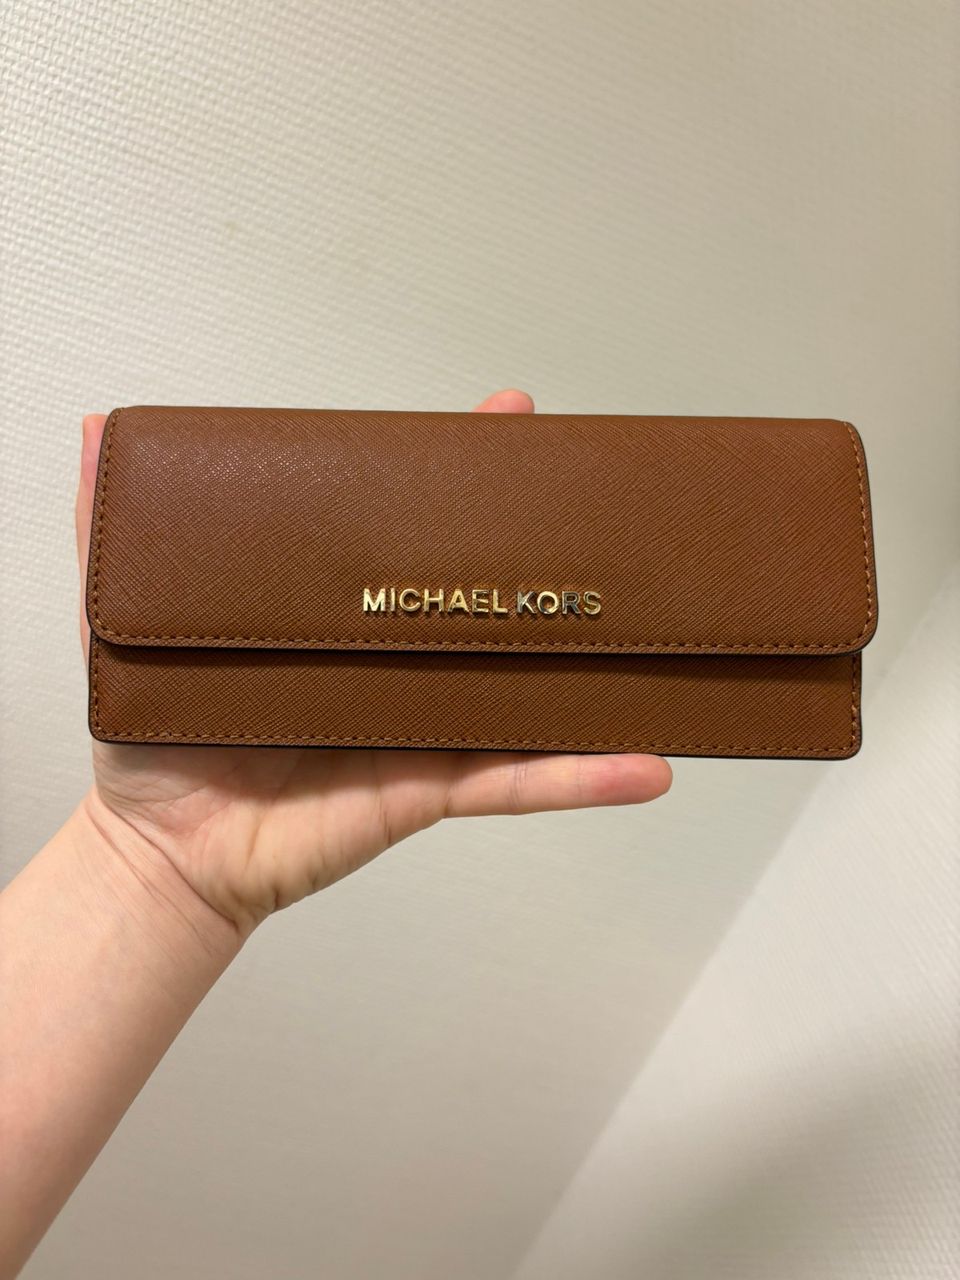 Michael kors lompakko